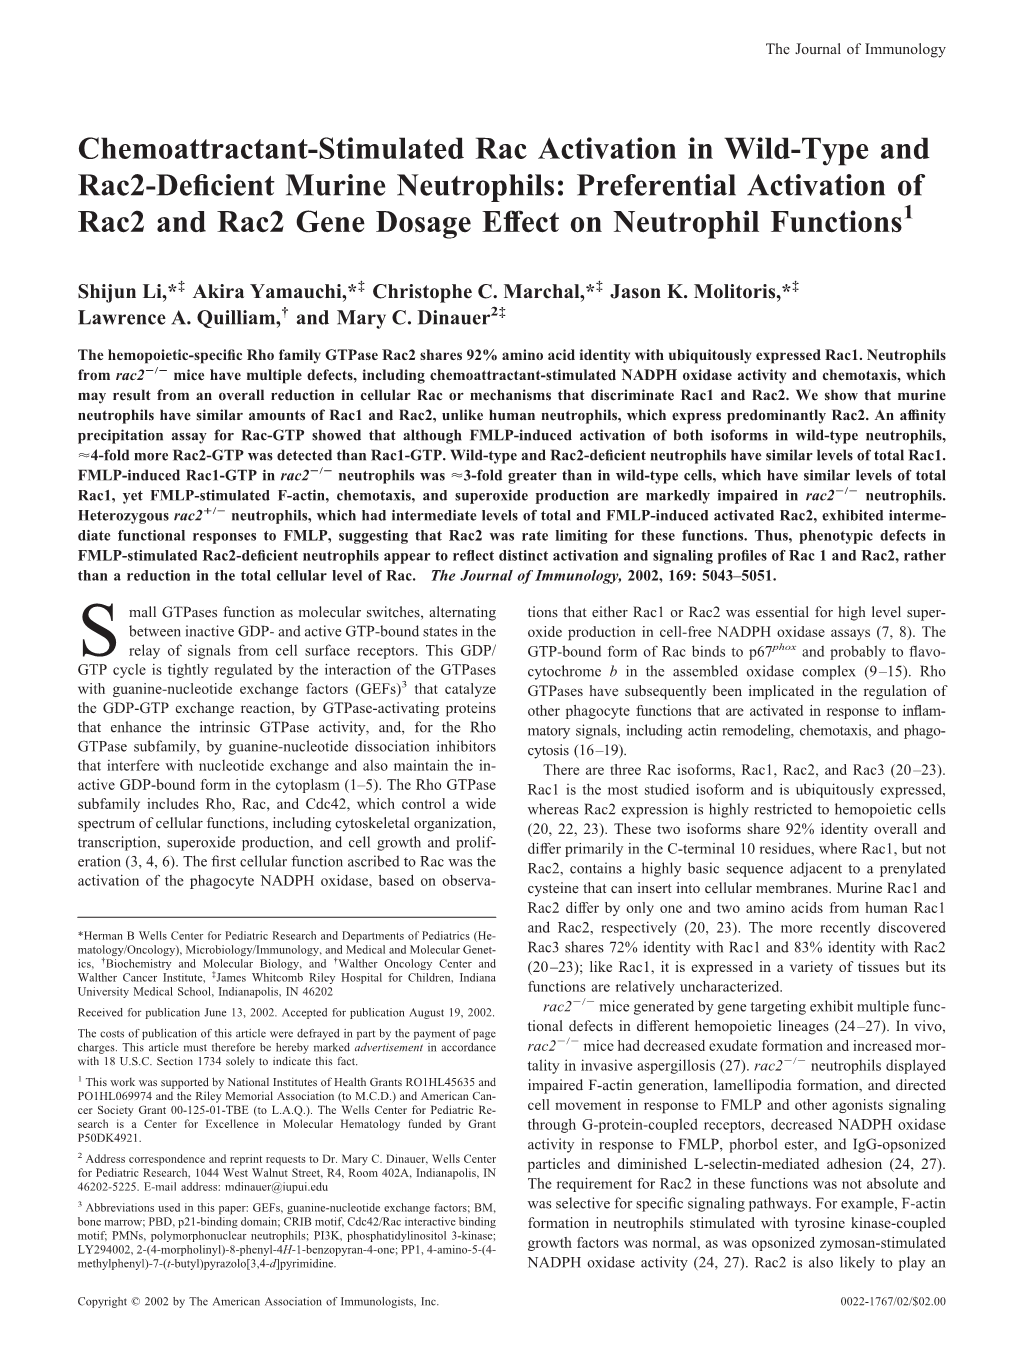 Functions and Rac2 Gene Dosage Effect on Neutrophil Neutrophils